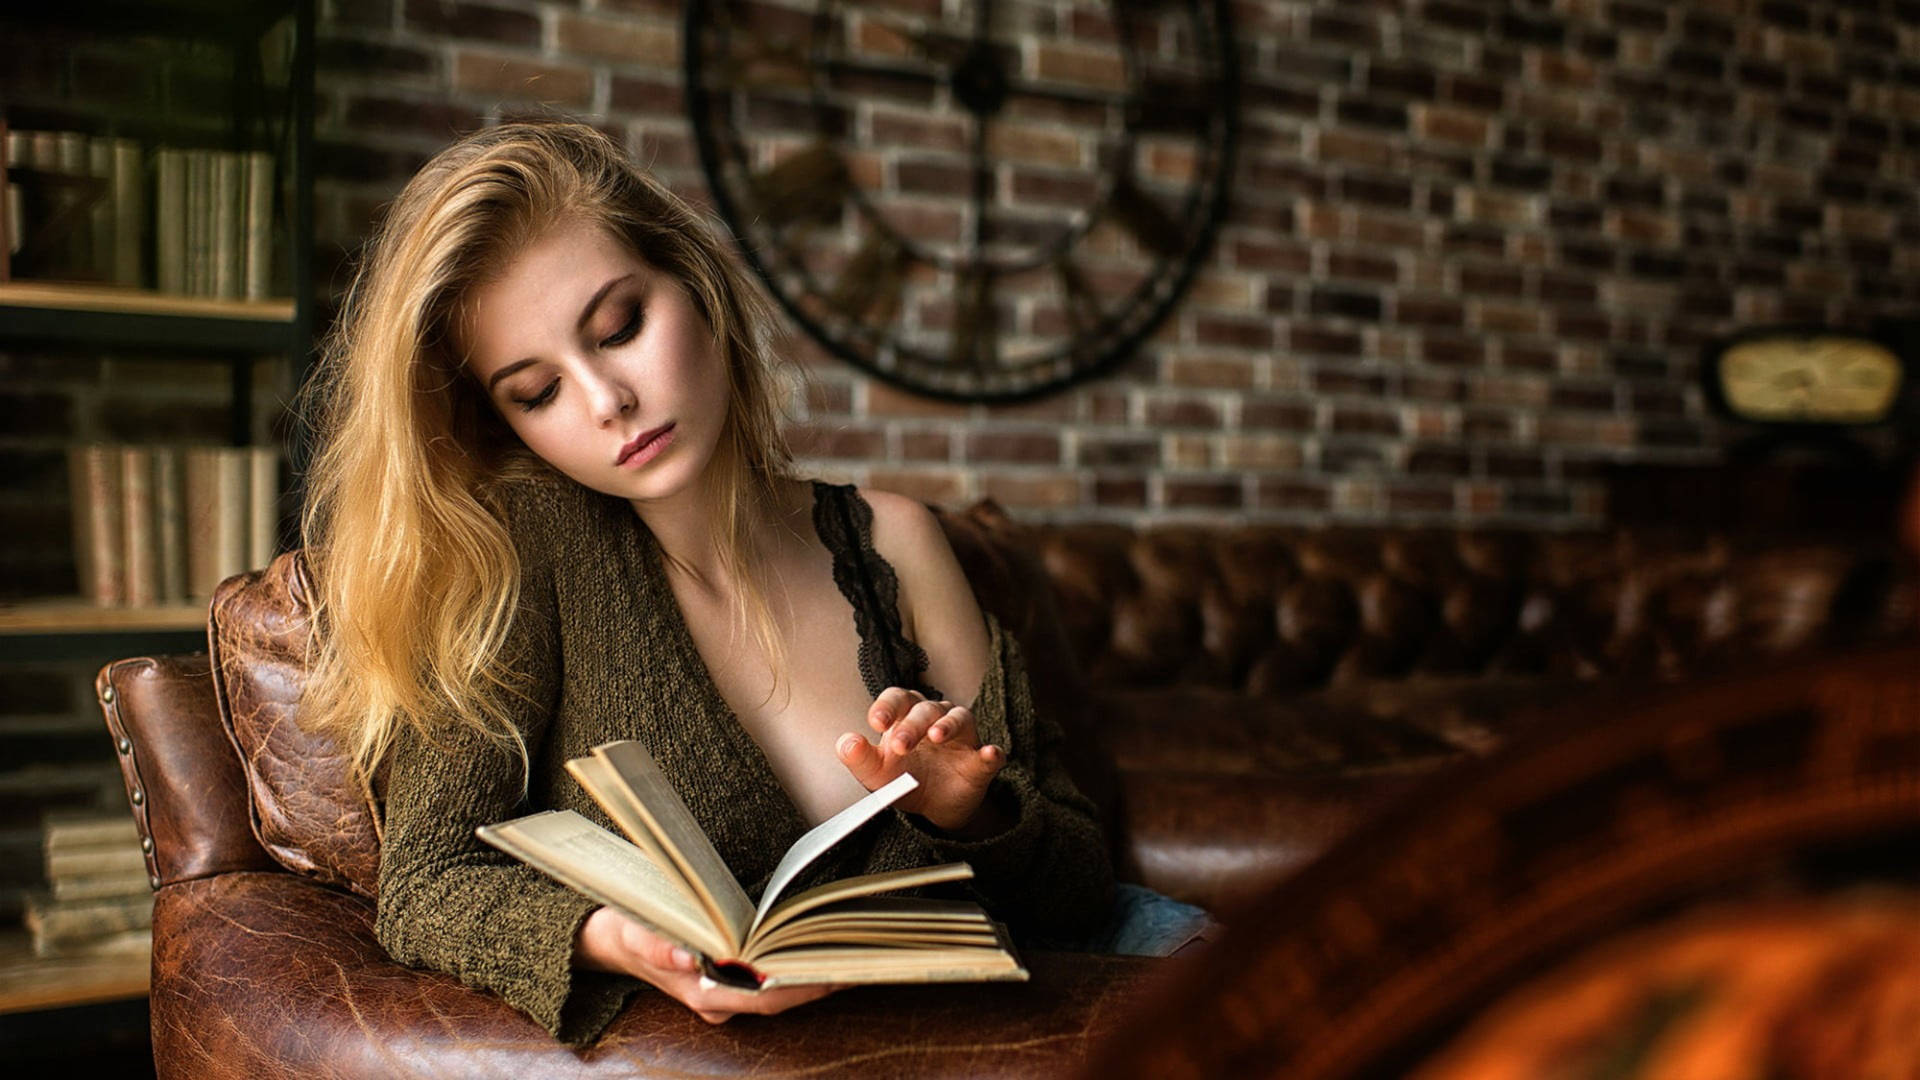 Blondie Girl Reading Book Wallpaper